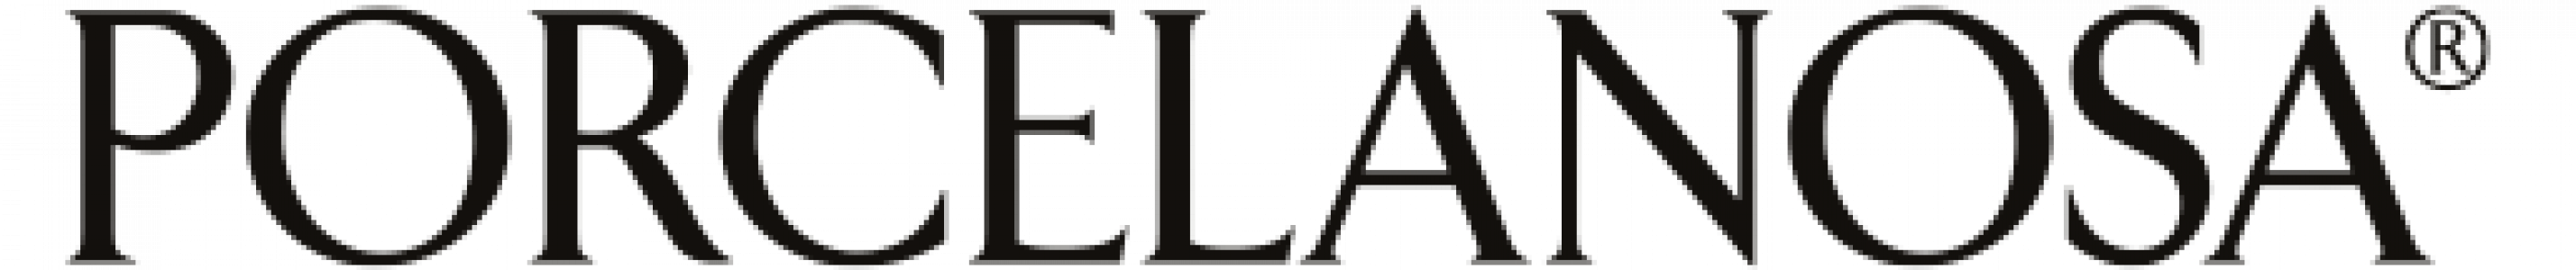 PORCELANOSA logo